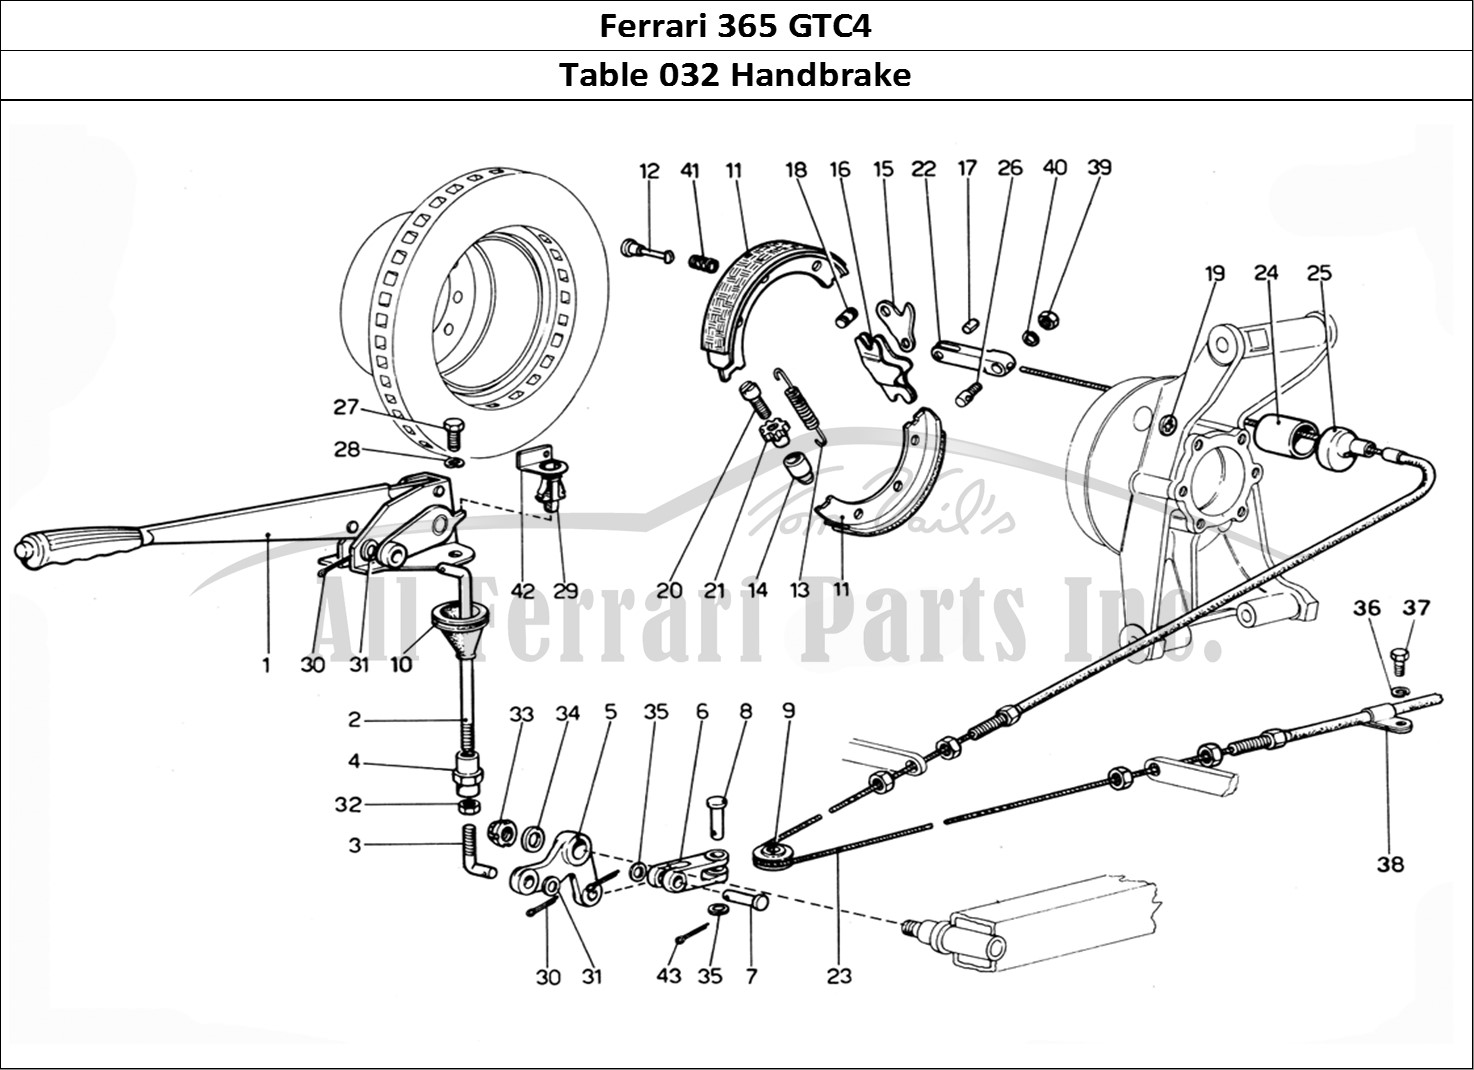 Ferrari Parts Ferrari 365 GTC4 (Mechanical) Page 032 Hand Brake